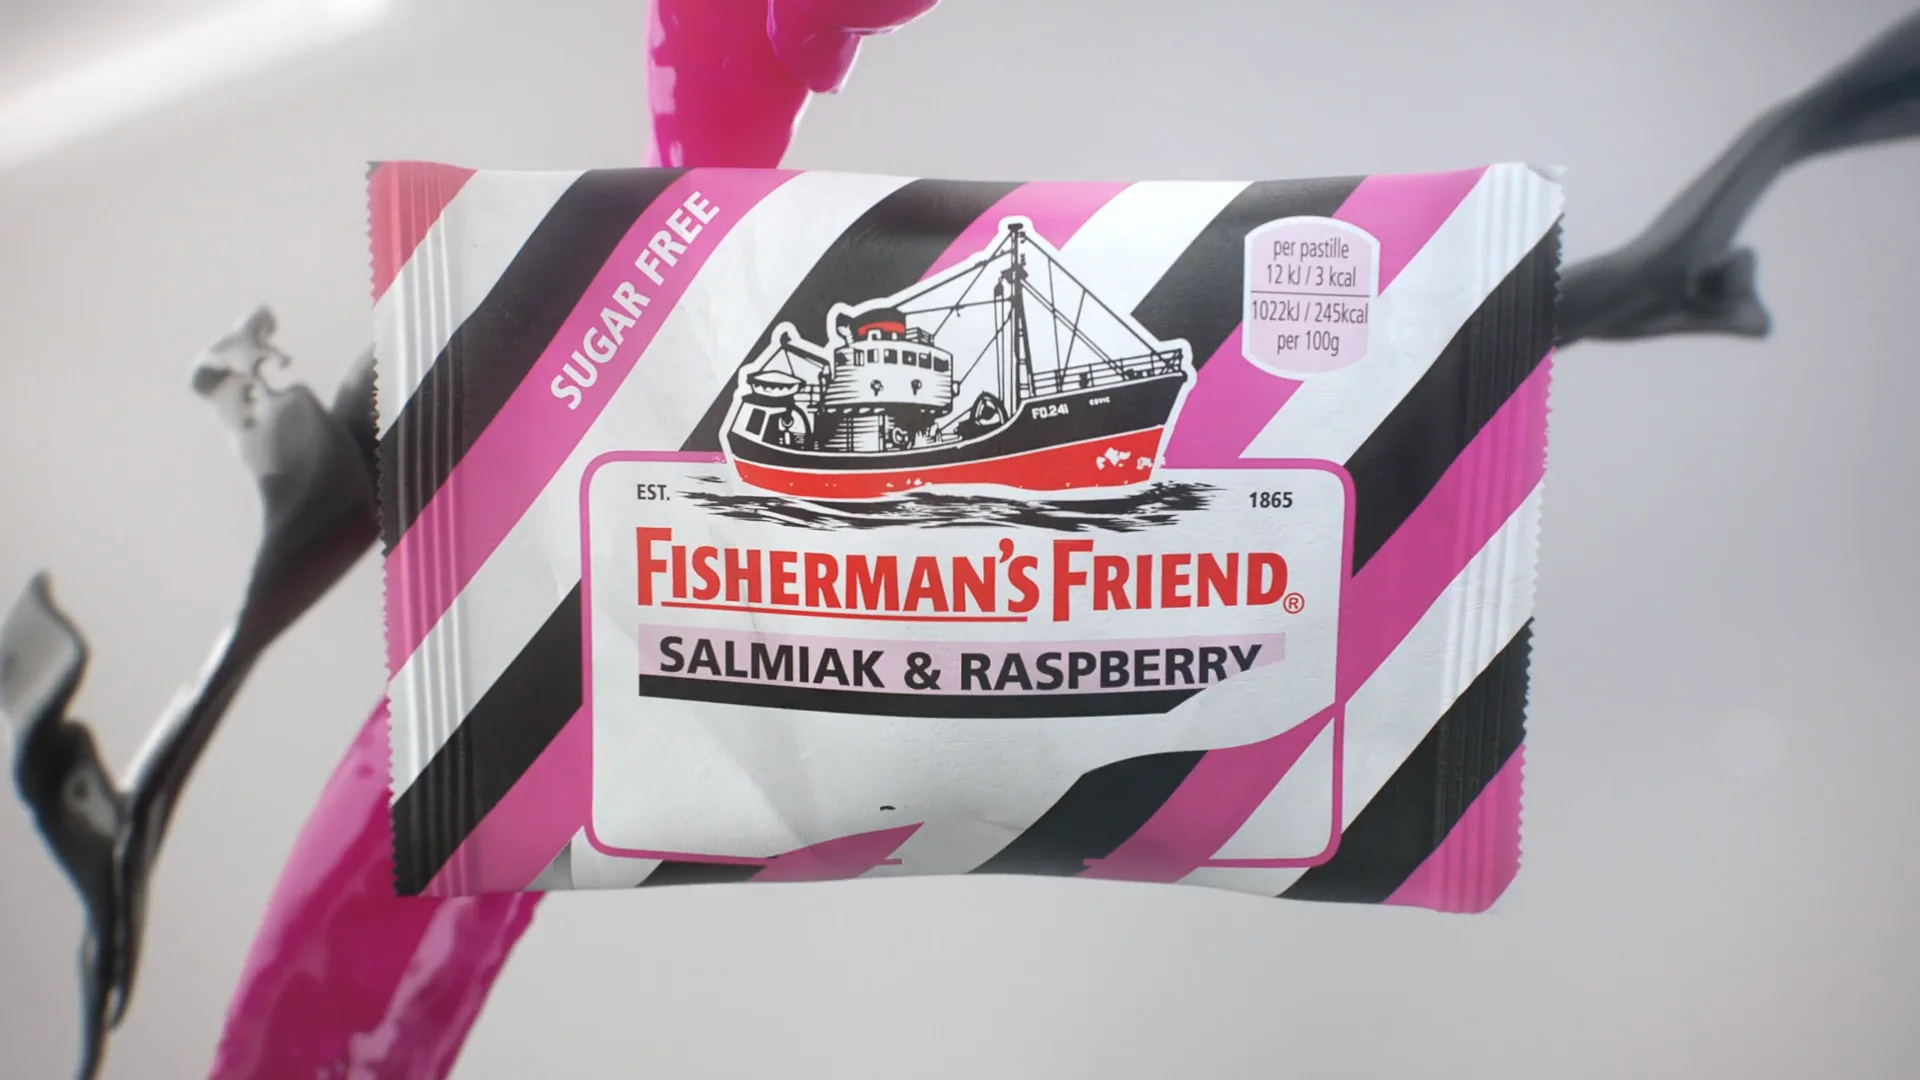 Fisherman’s Friend Salmiak & Raspberry